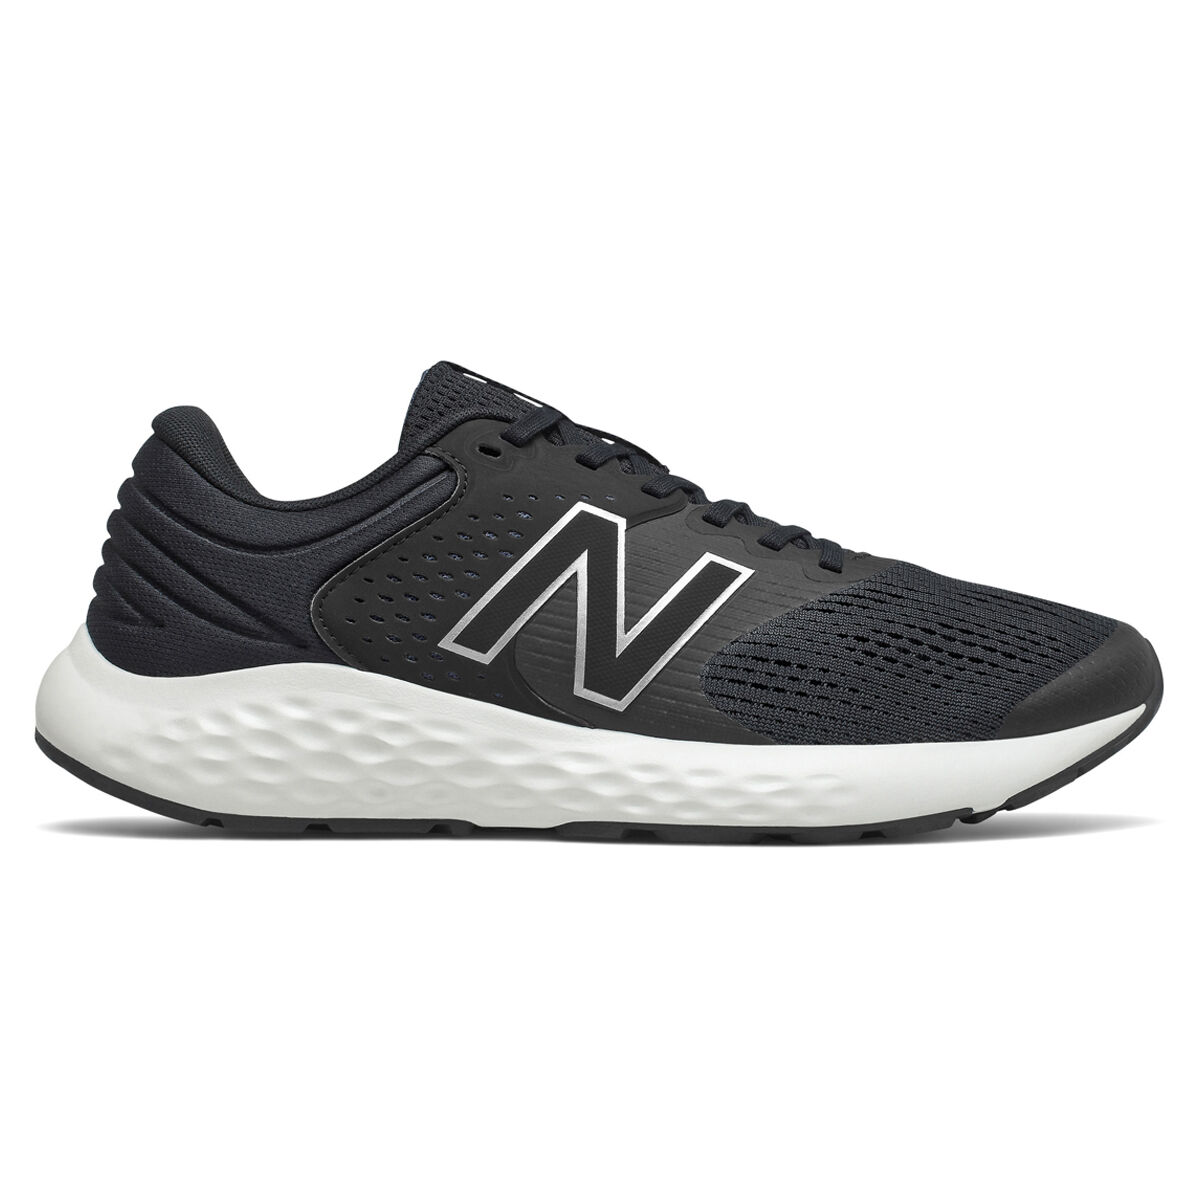 New Balance 520 v7 Mens Running Shoes 